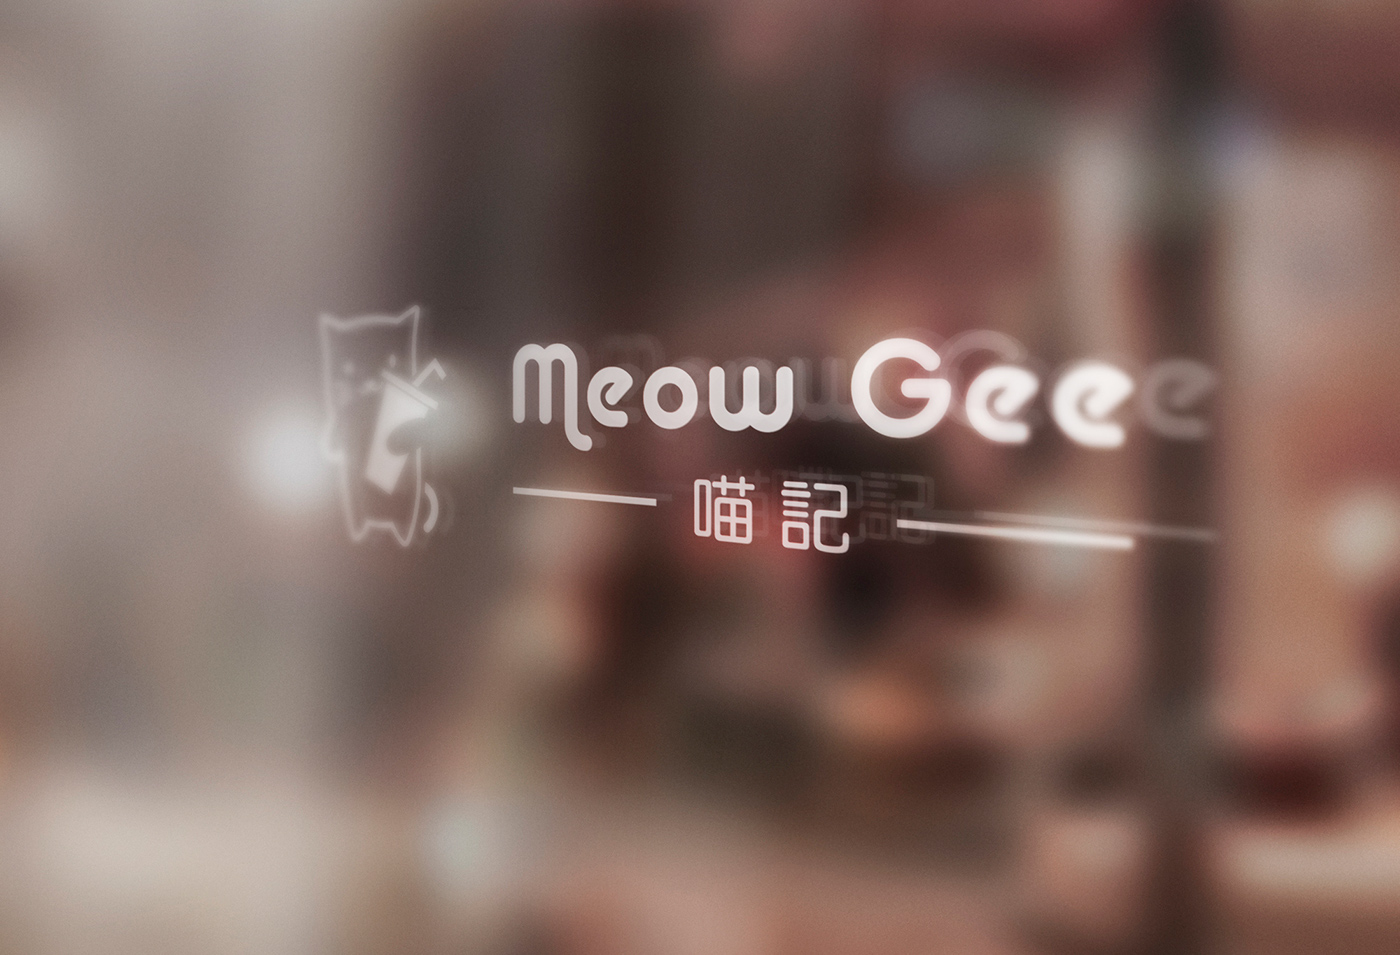 Cat meow gee MeowGee Mack chan studio hong kong hk hk logo brand color orange